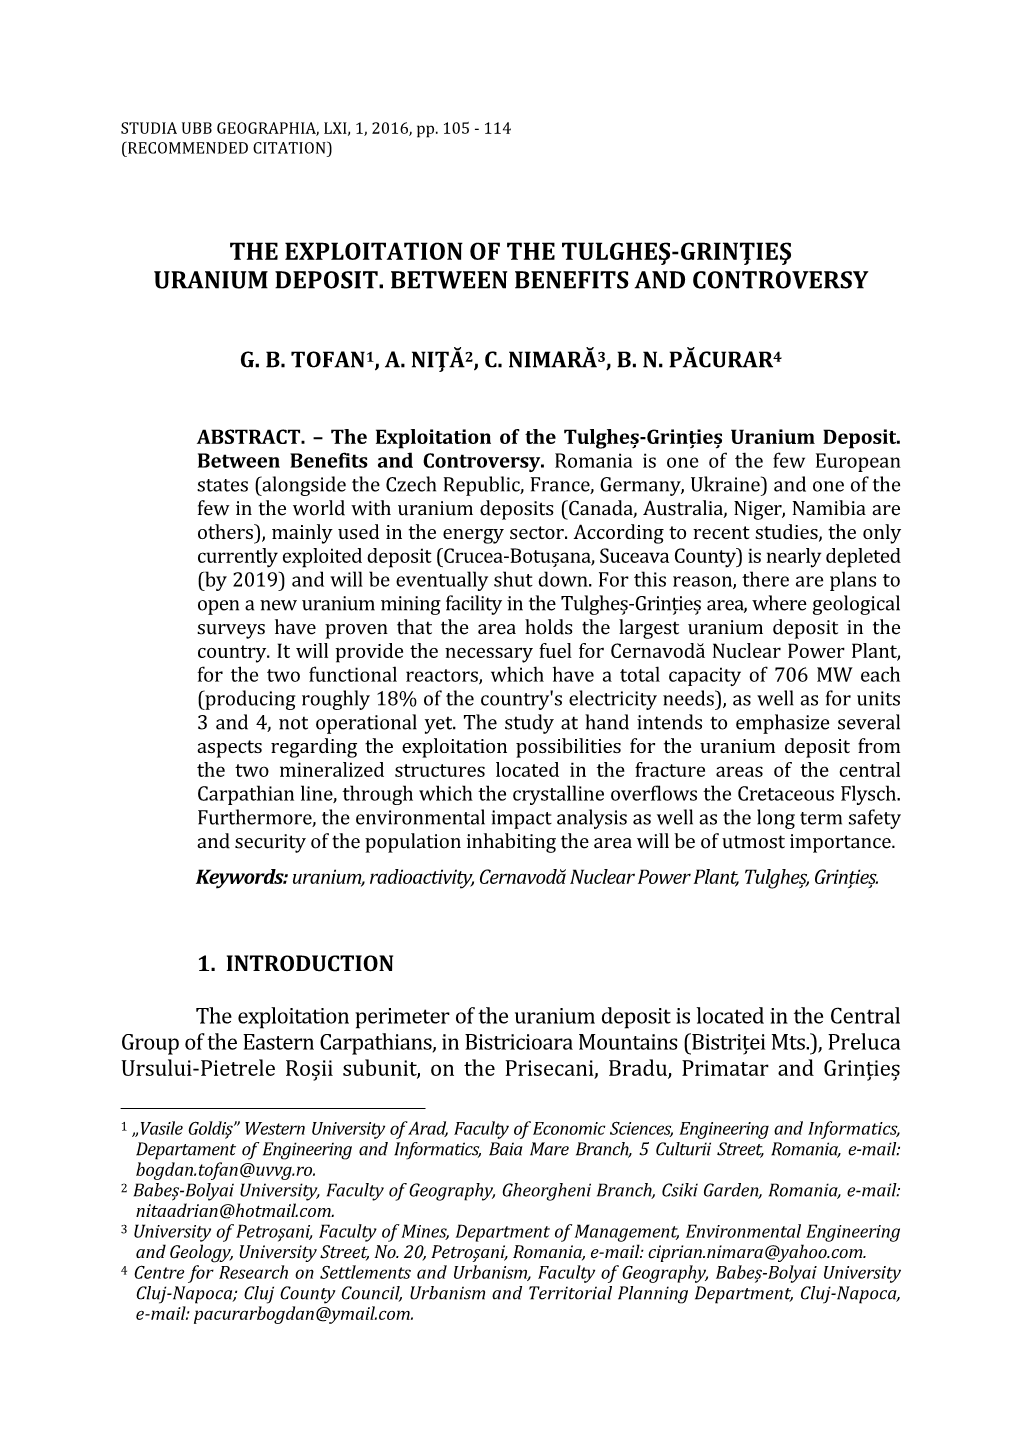 The Exploitation of the Tulgheş-Grinţieş Uranium Deposit. Between Benefits and Controversy